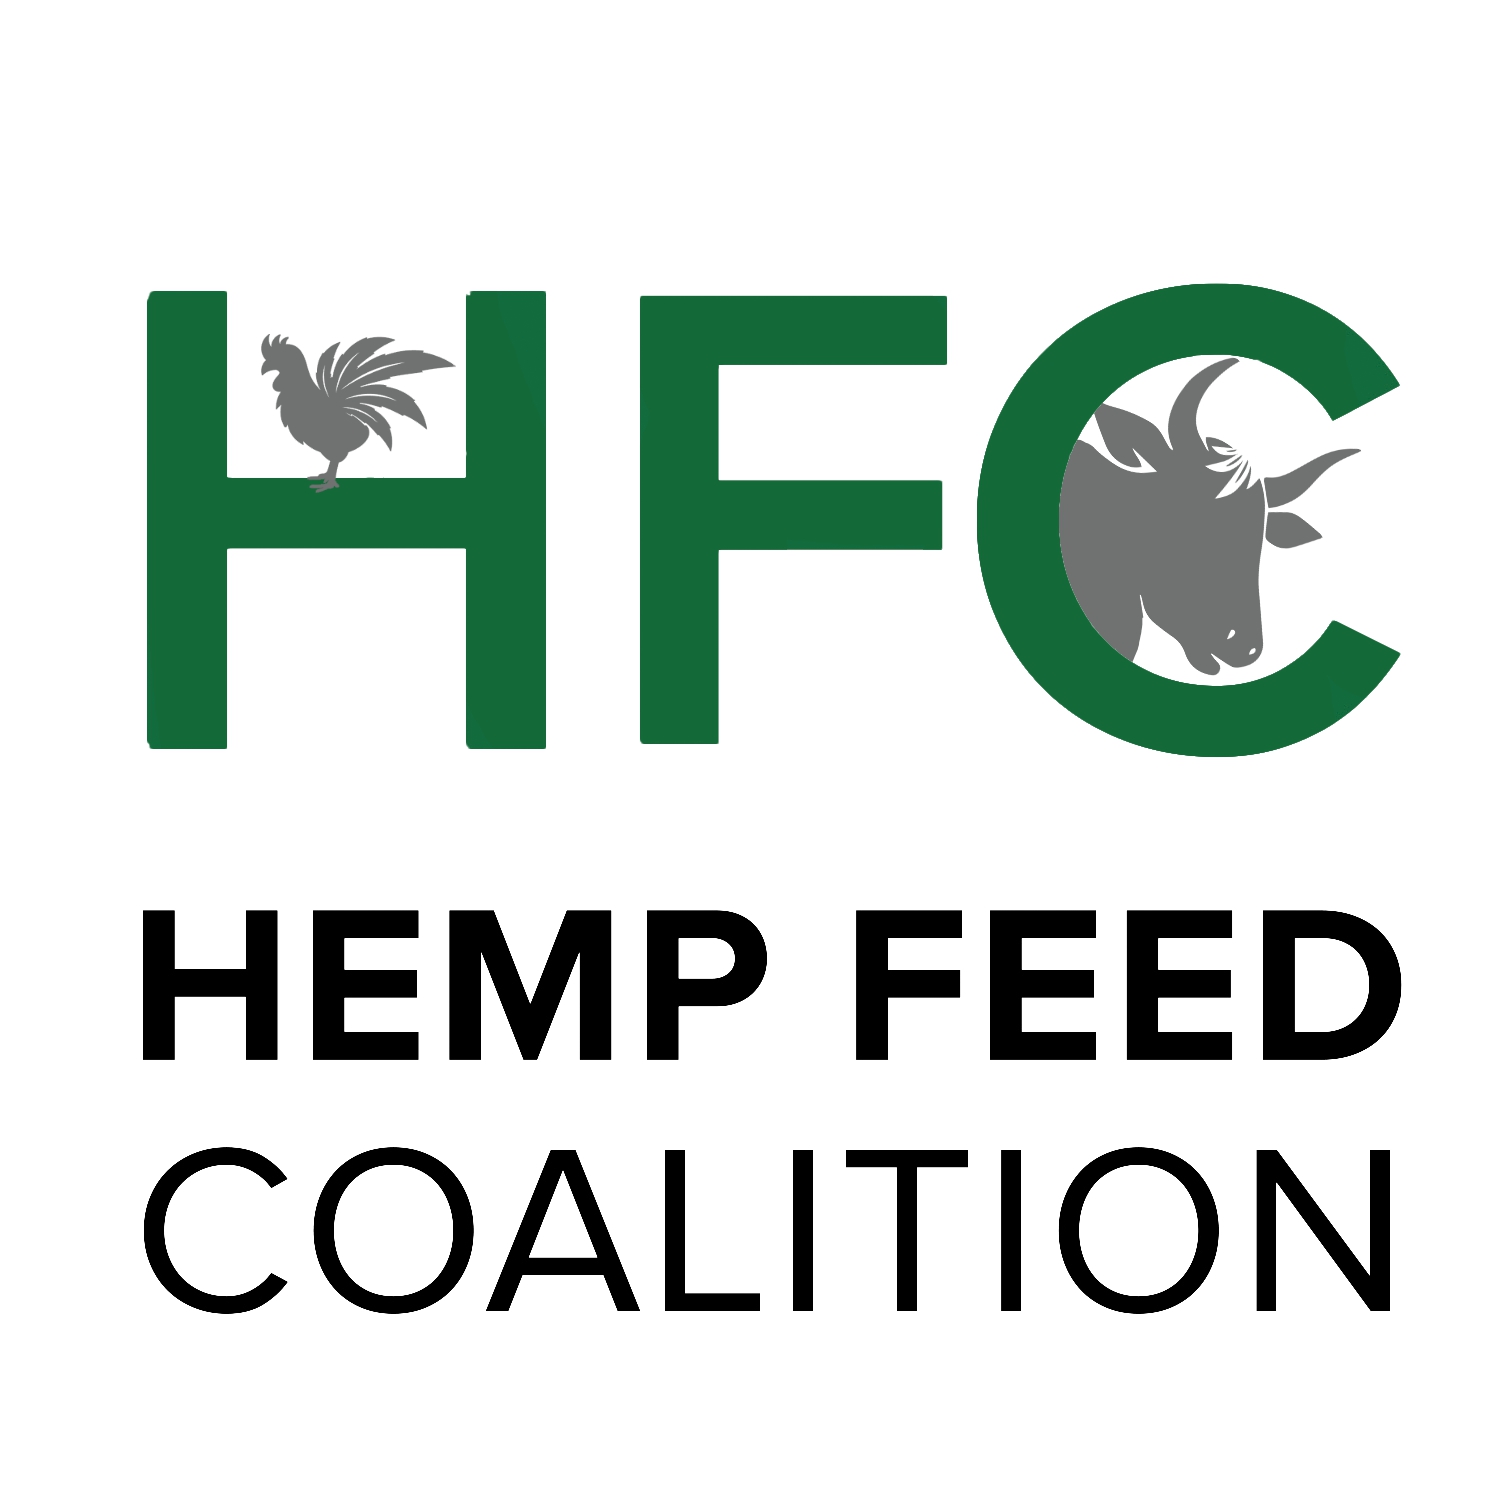 Hemp Feed Coalition